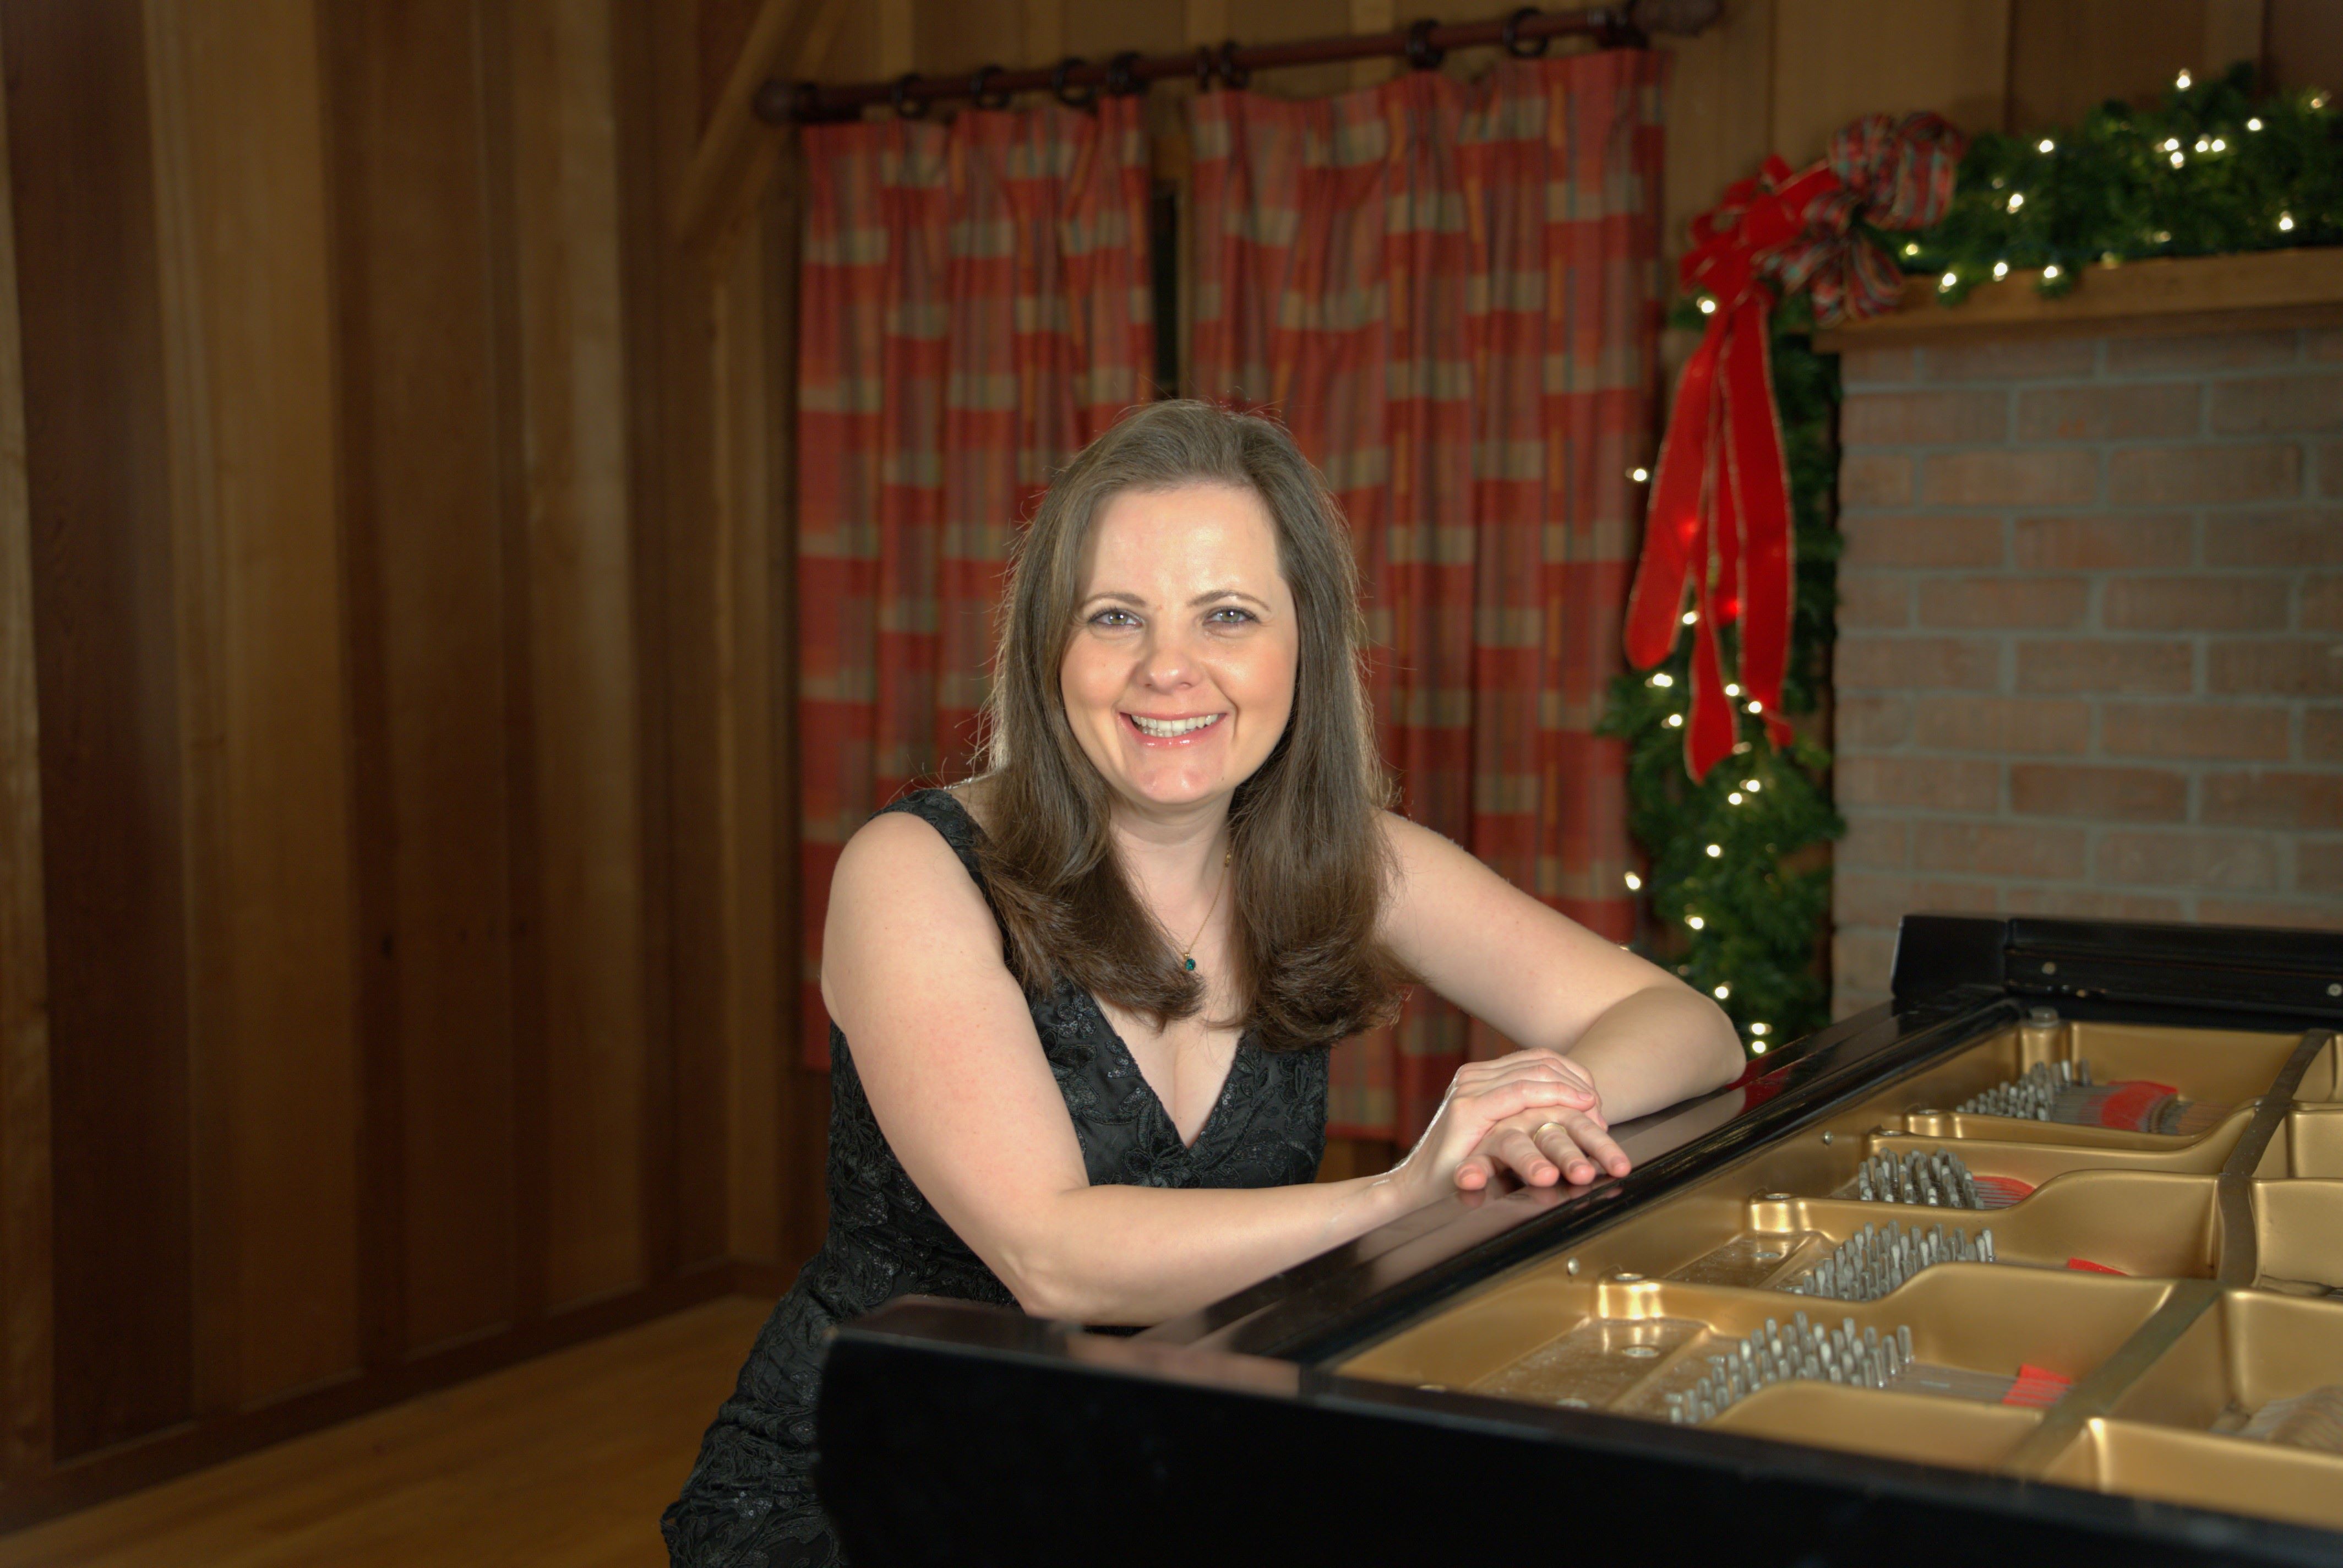 Katherine Dvoskin piano teacher of K&M Music School in San Diego